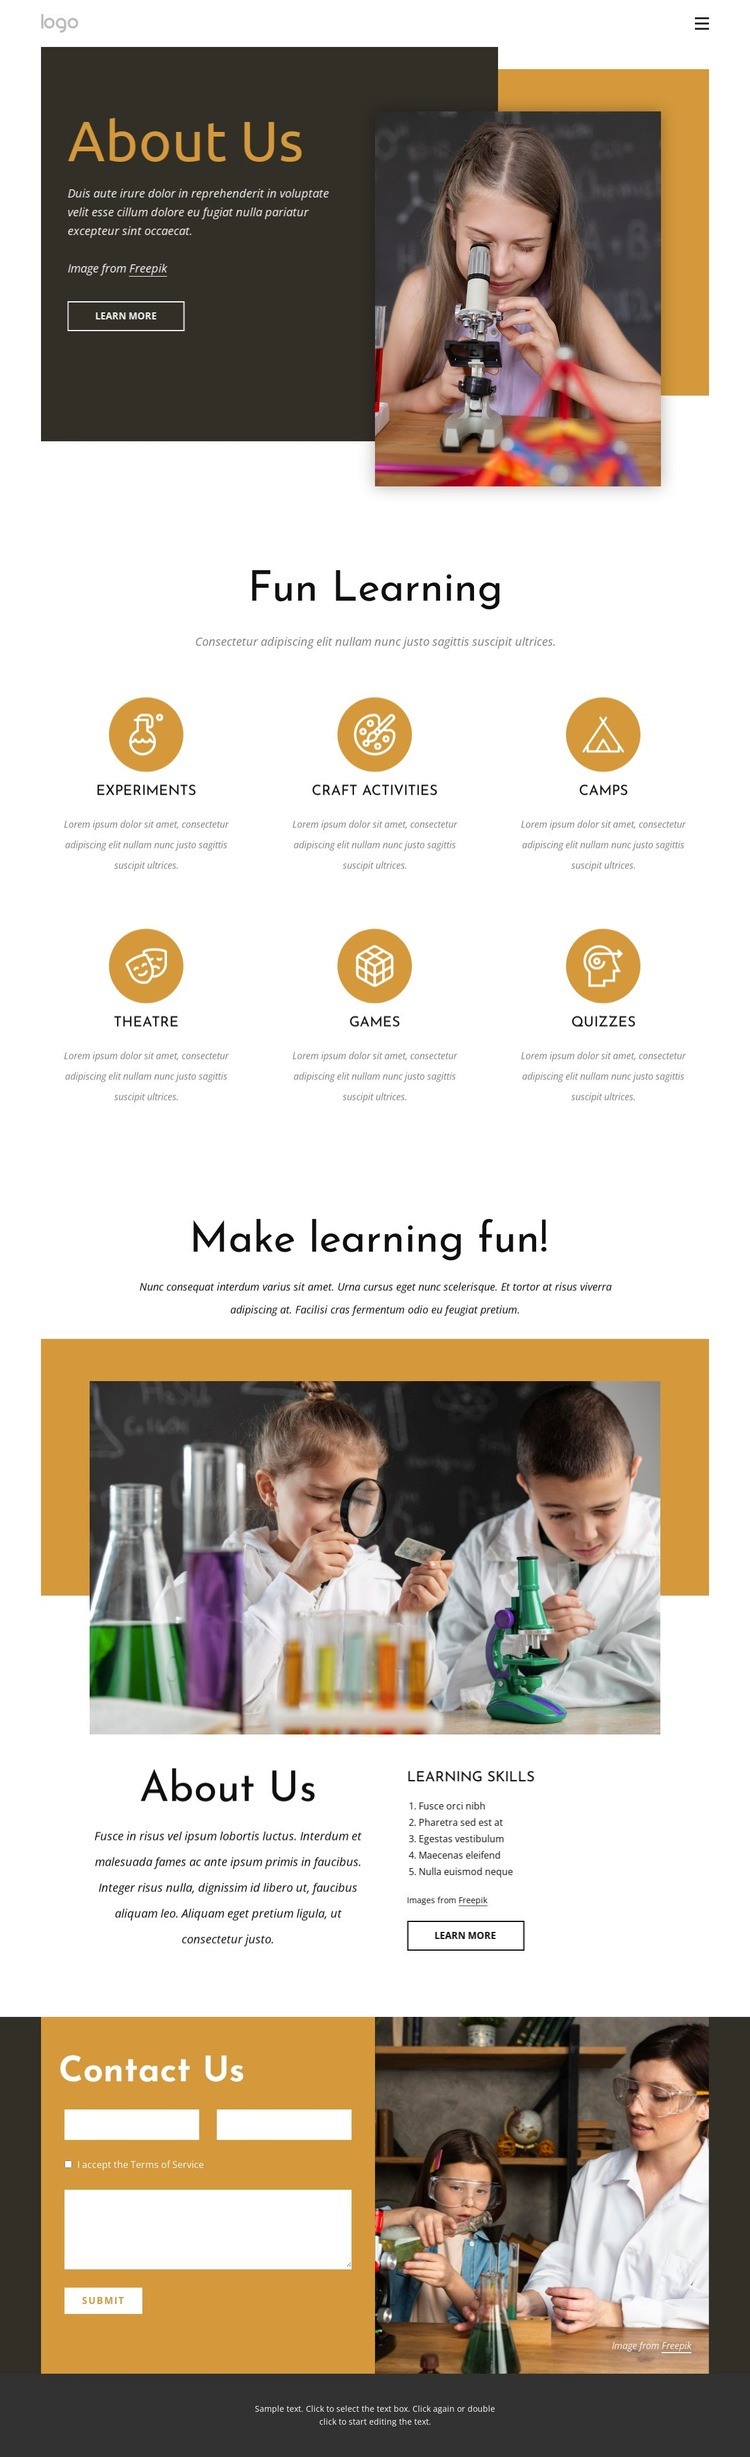 Fun learning Web Page Design